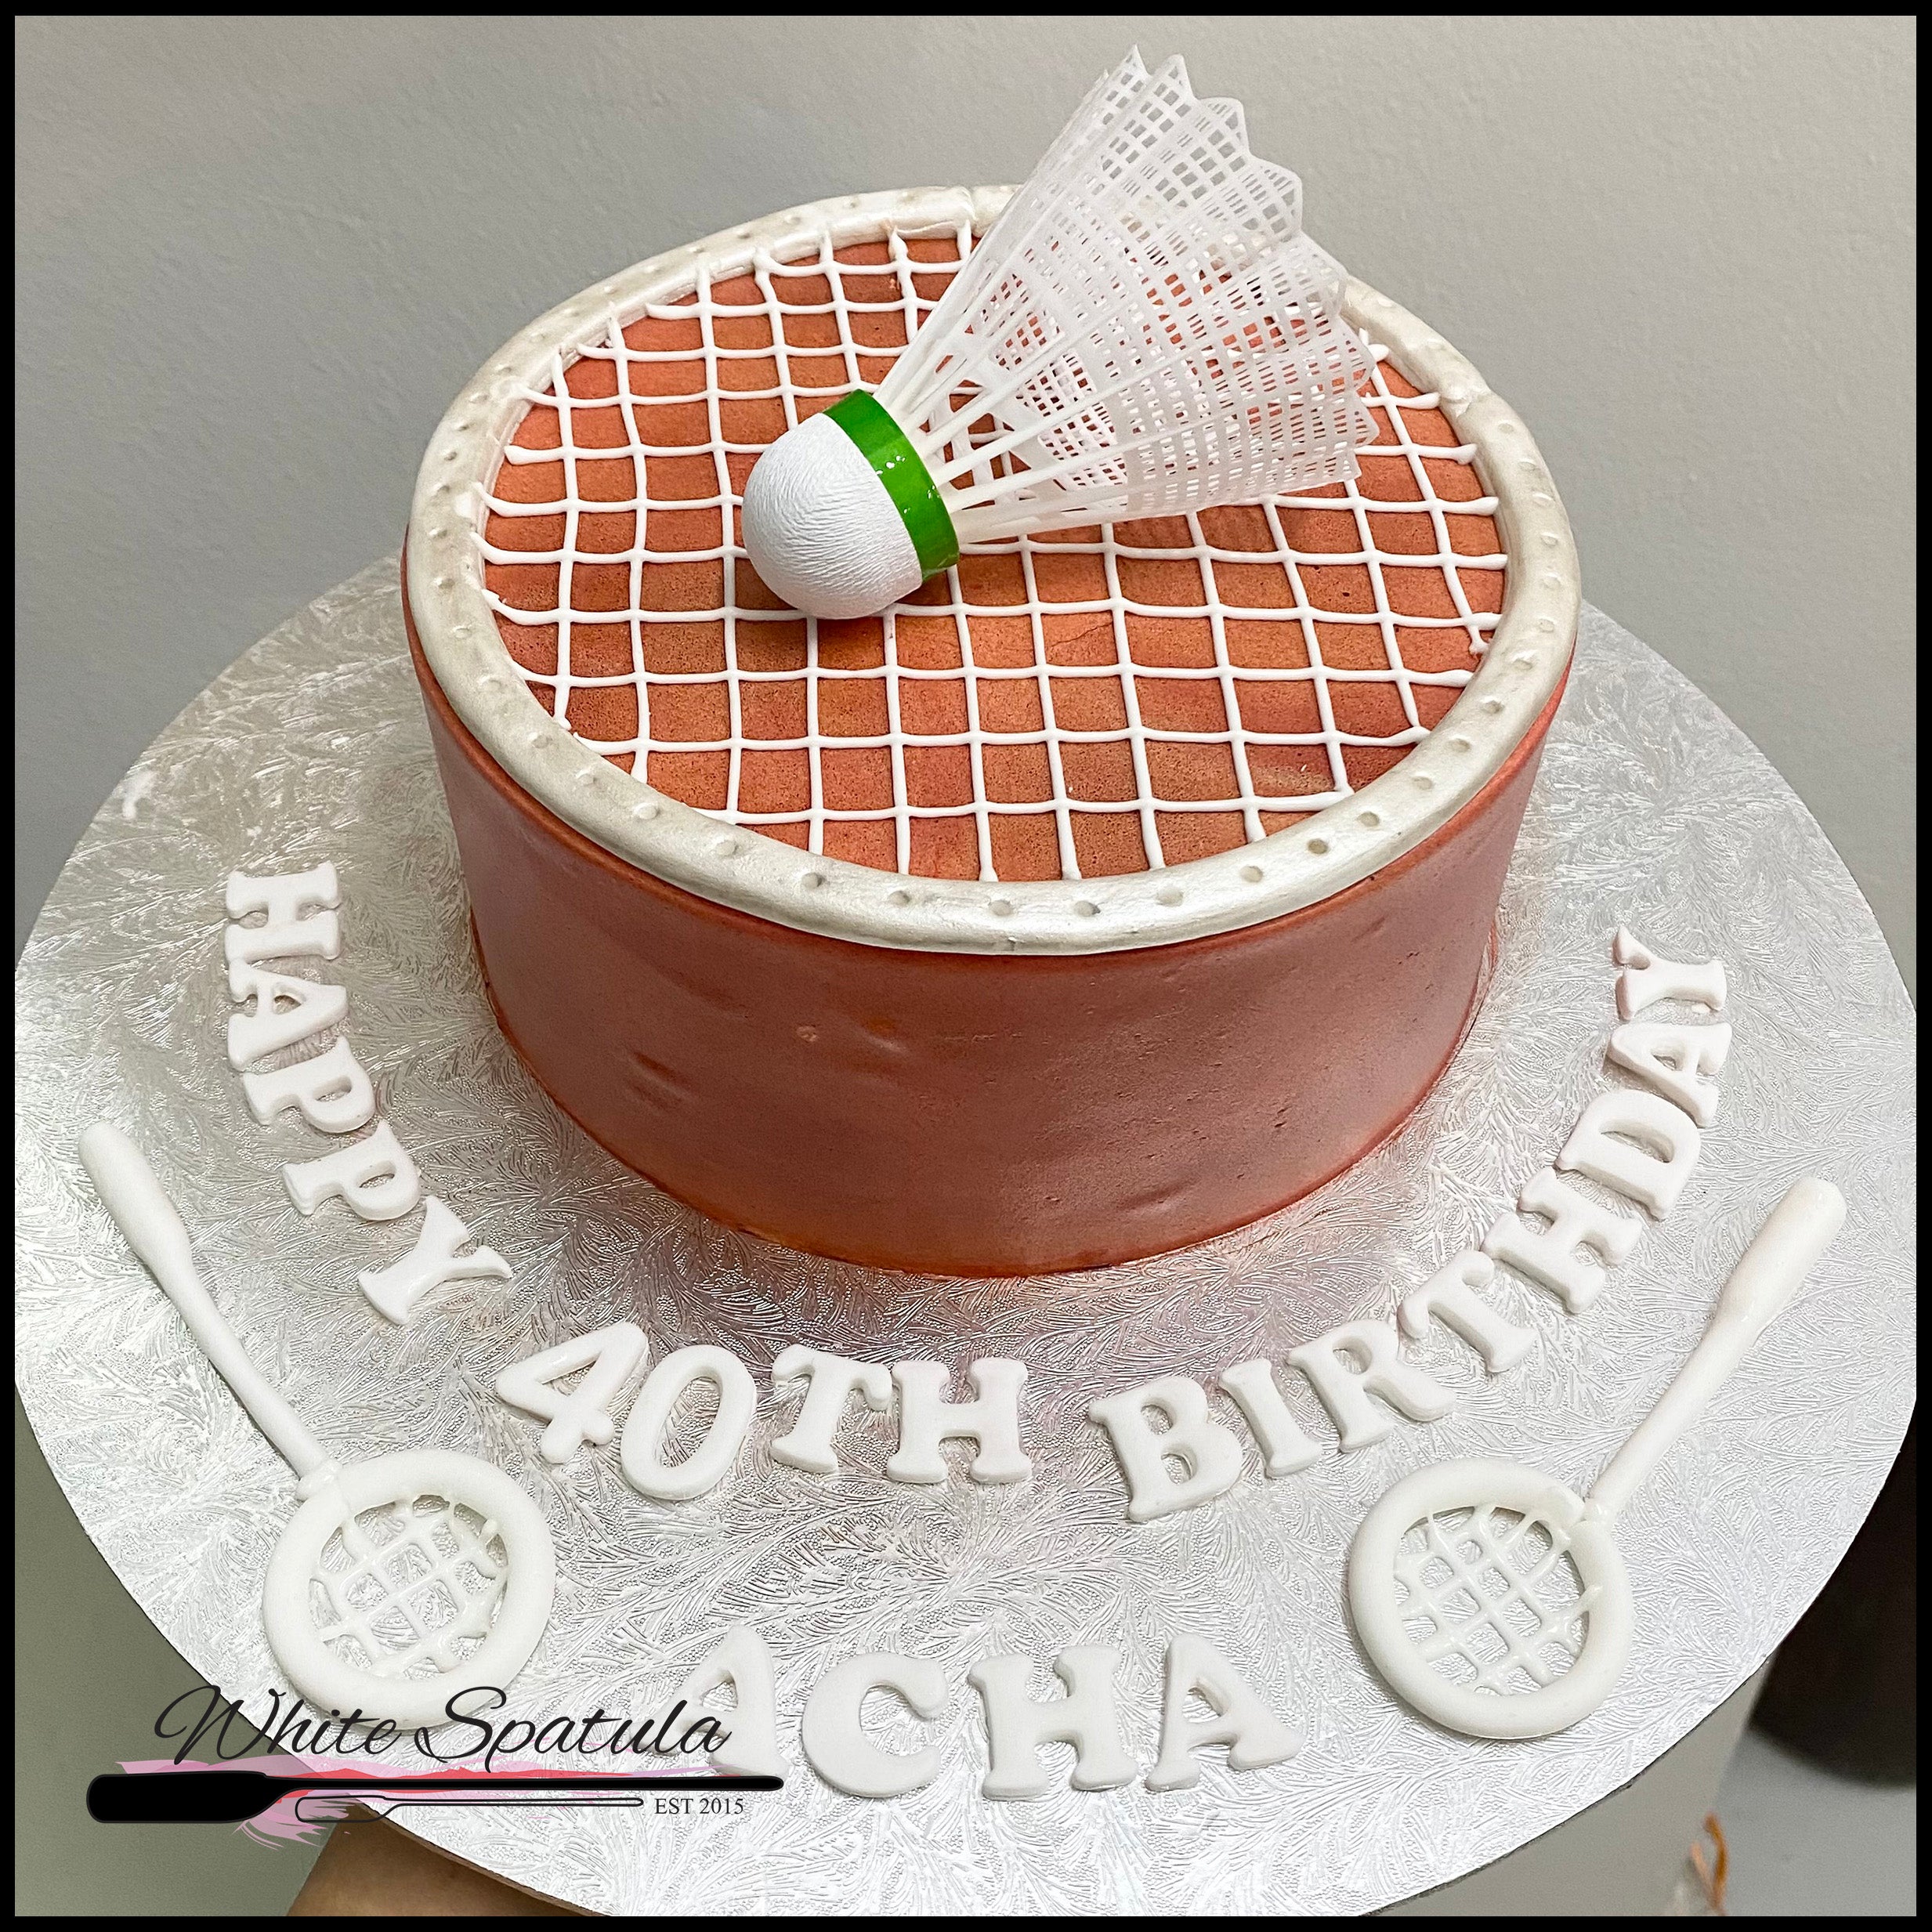 Badminton cake - Decorated Cake by PetiCakes / Peti - CakesDecor